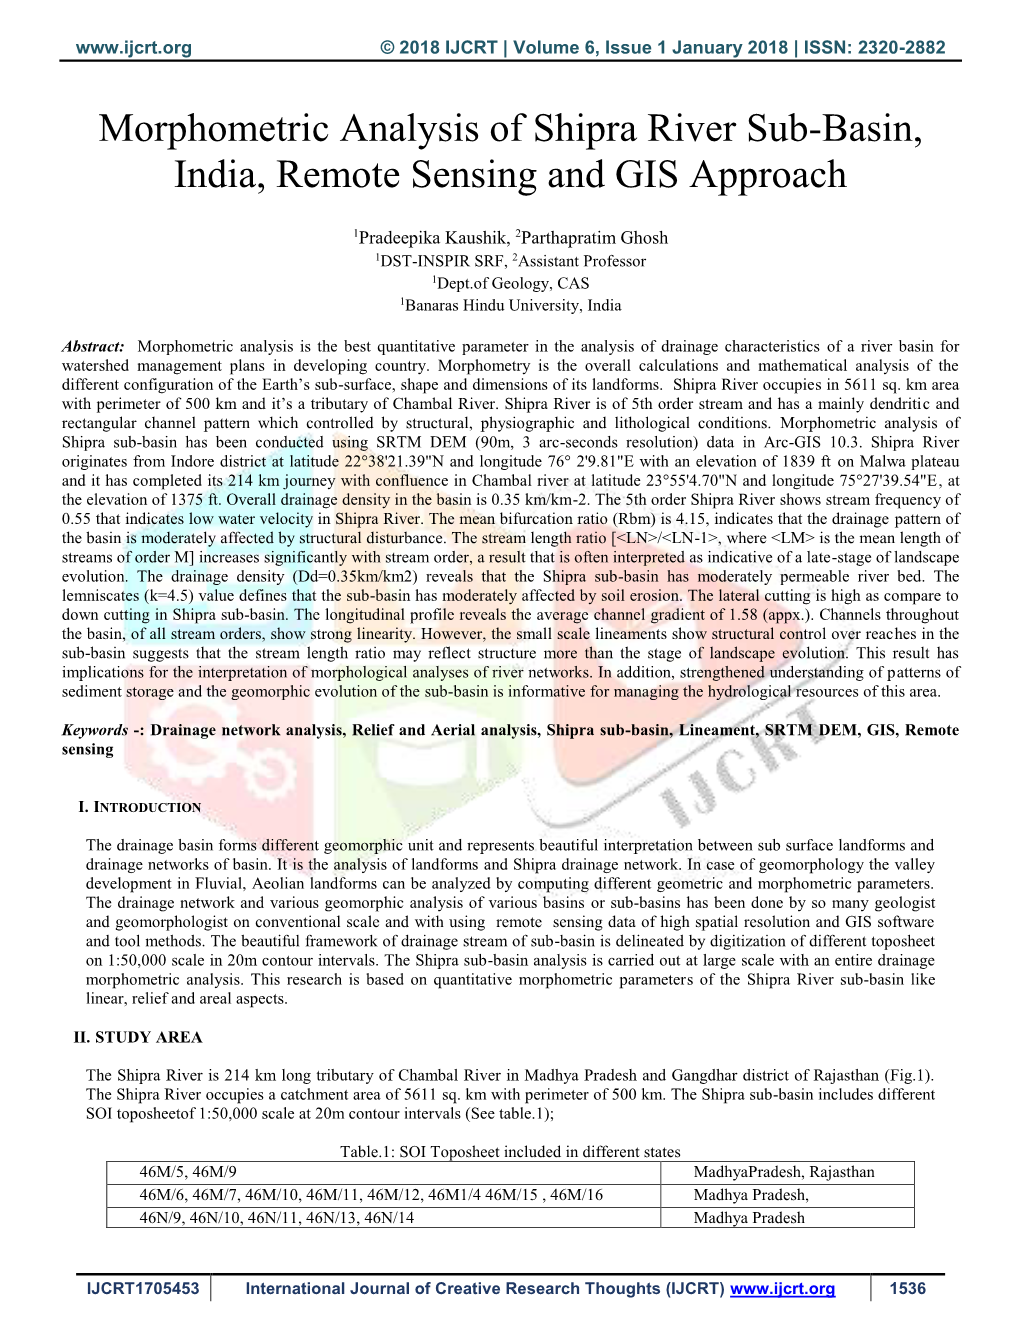 Morphometric Analysis of Shipra River Sub-Basin, India, Remote Sensing and GIS Approach